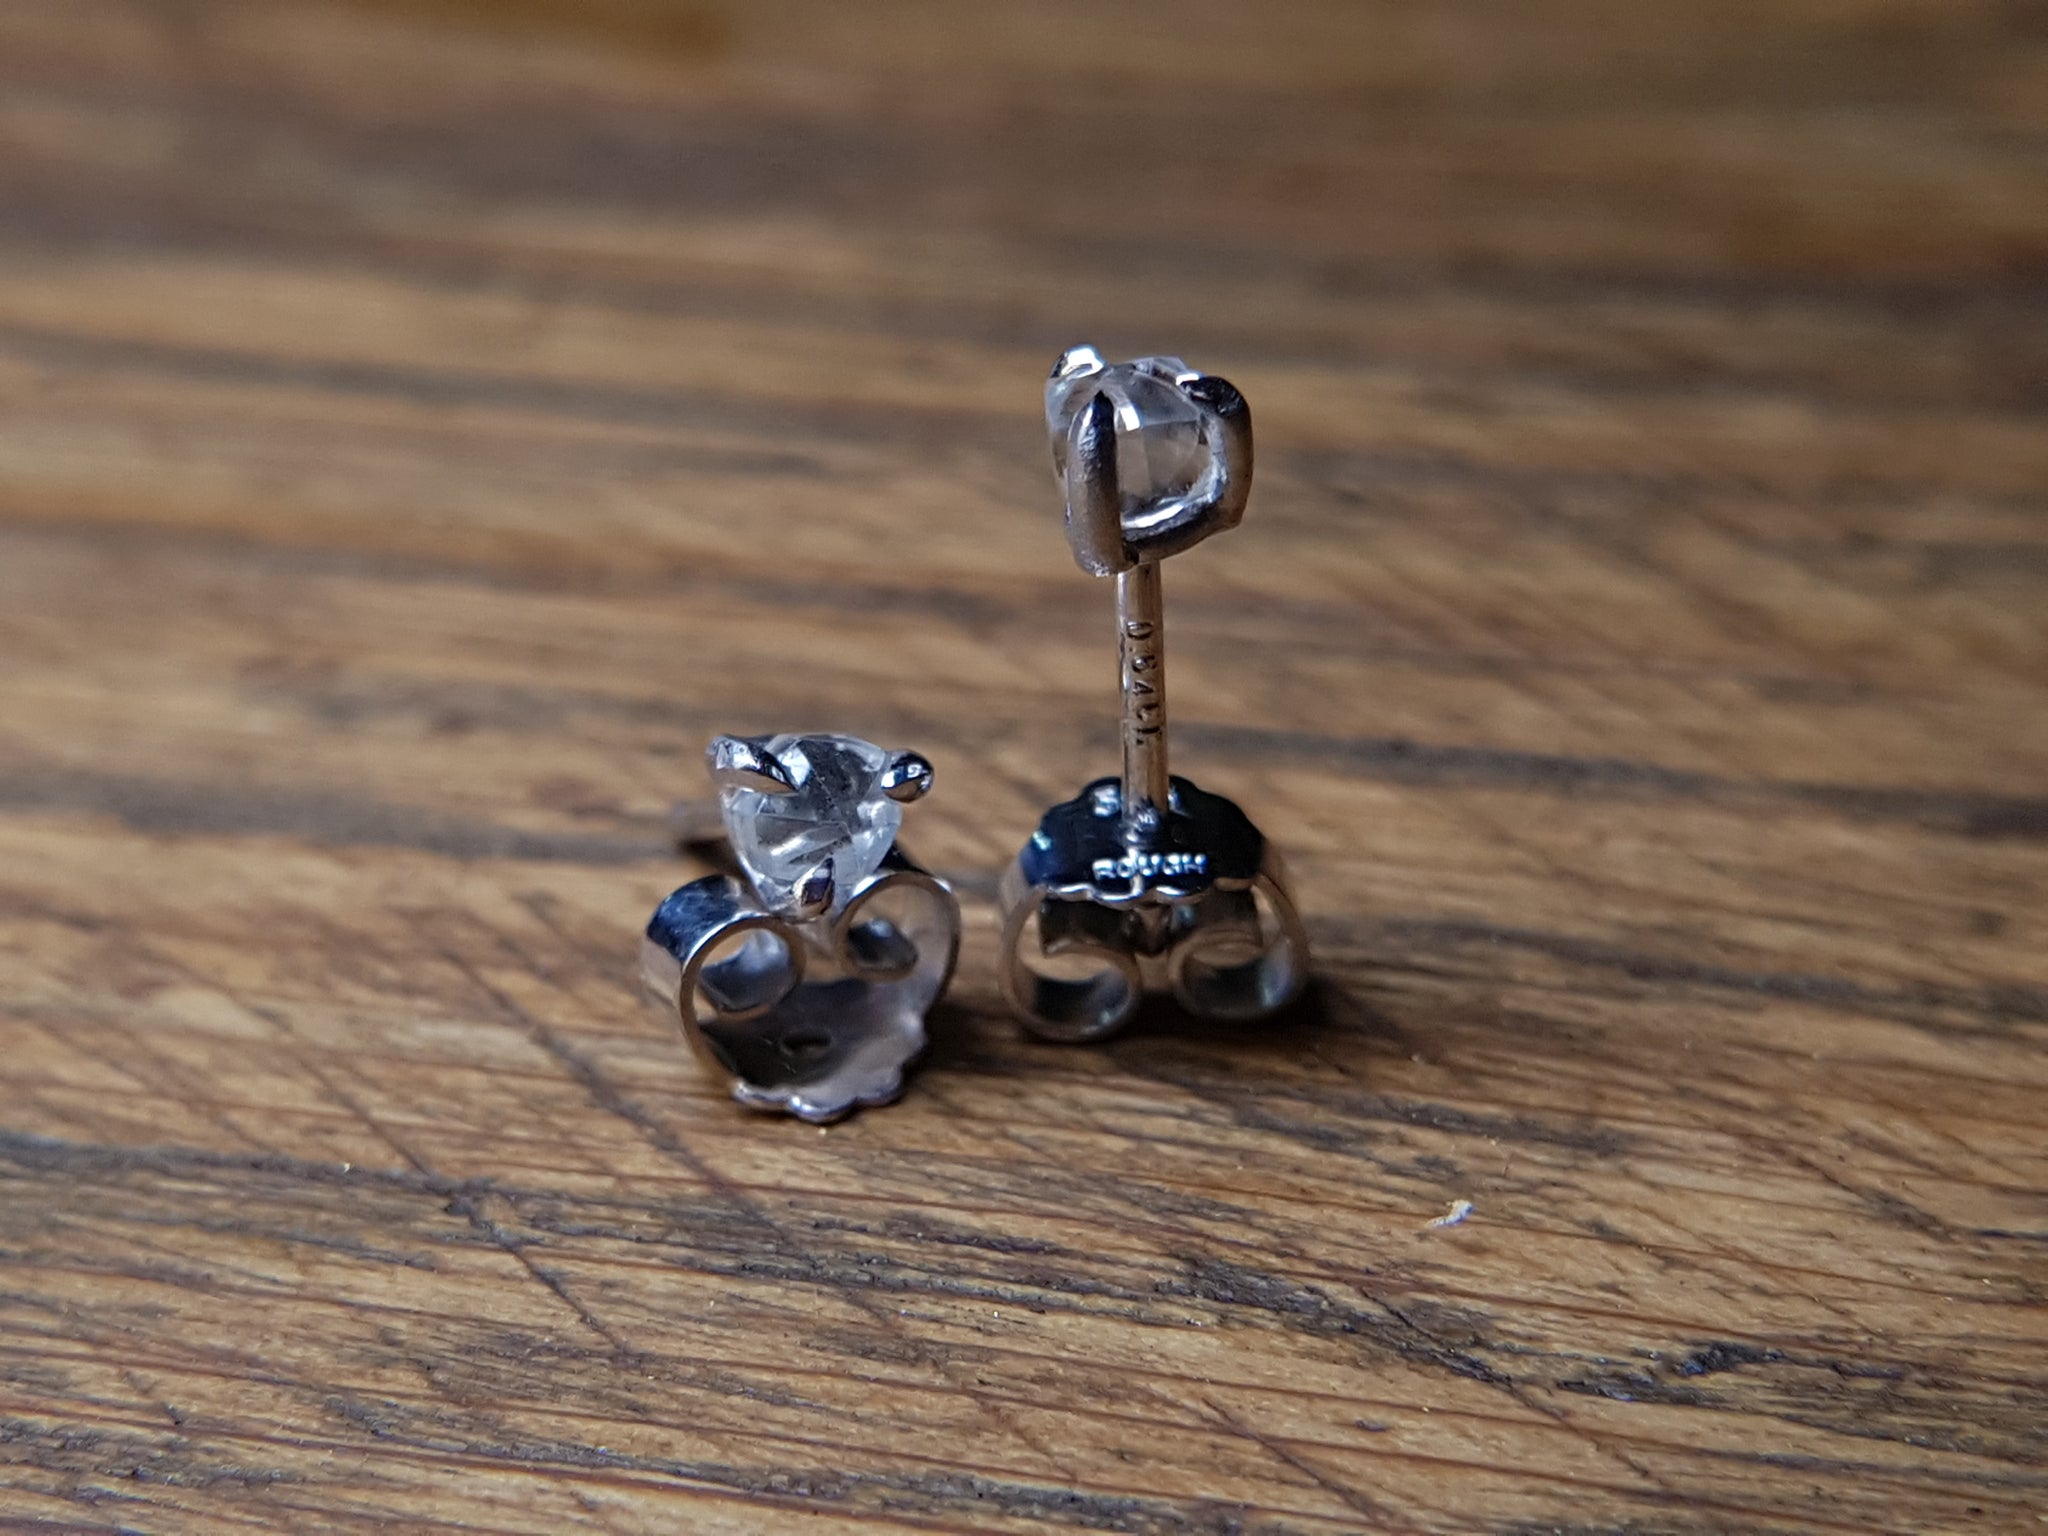 Baby Diamond Earrings